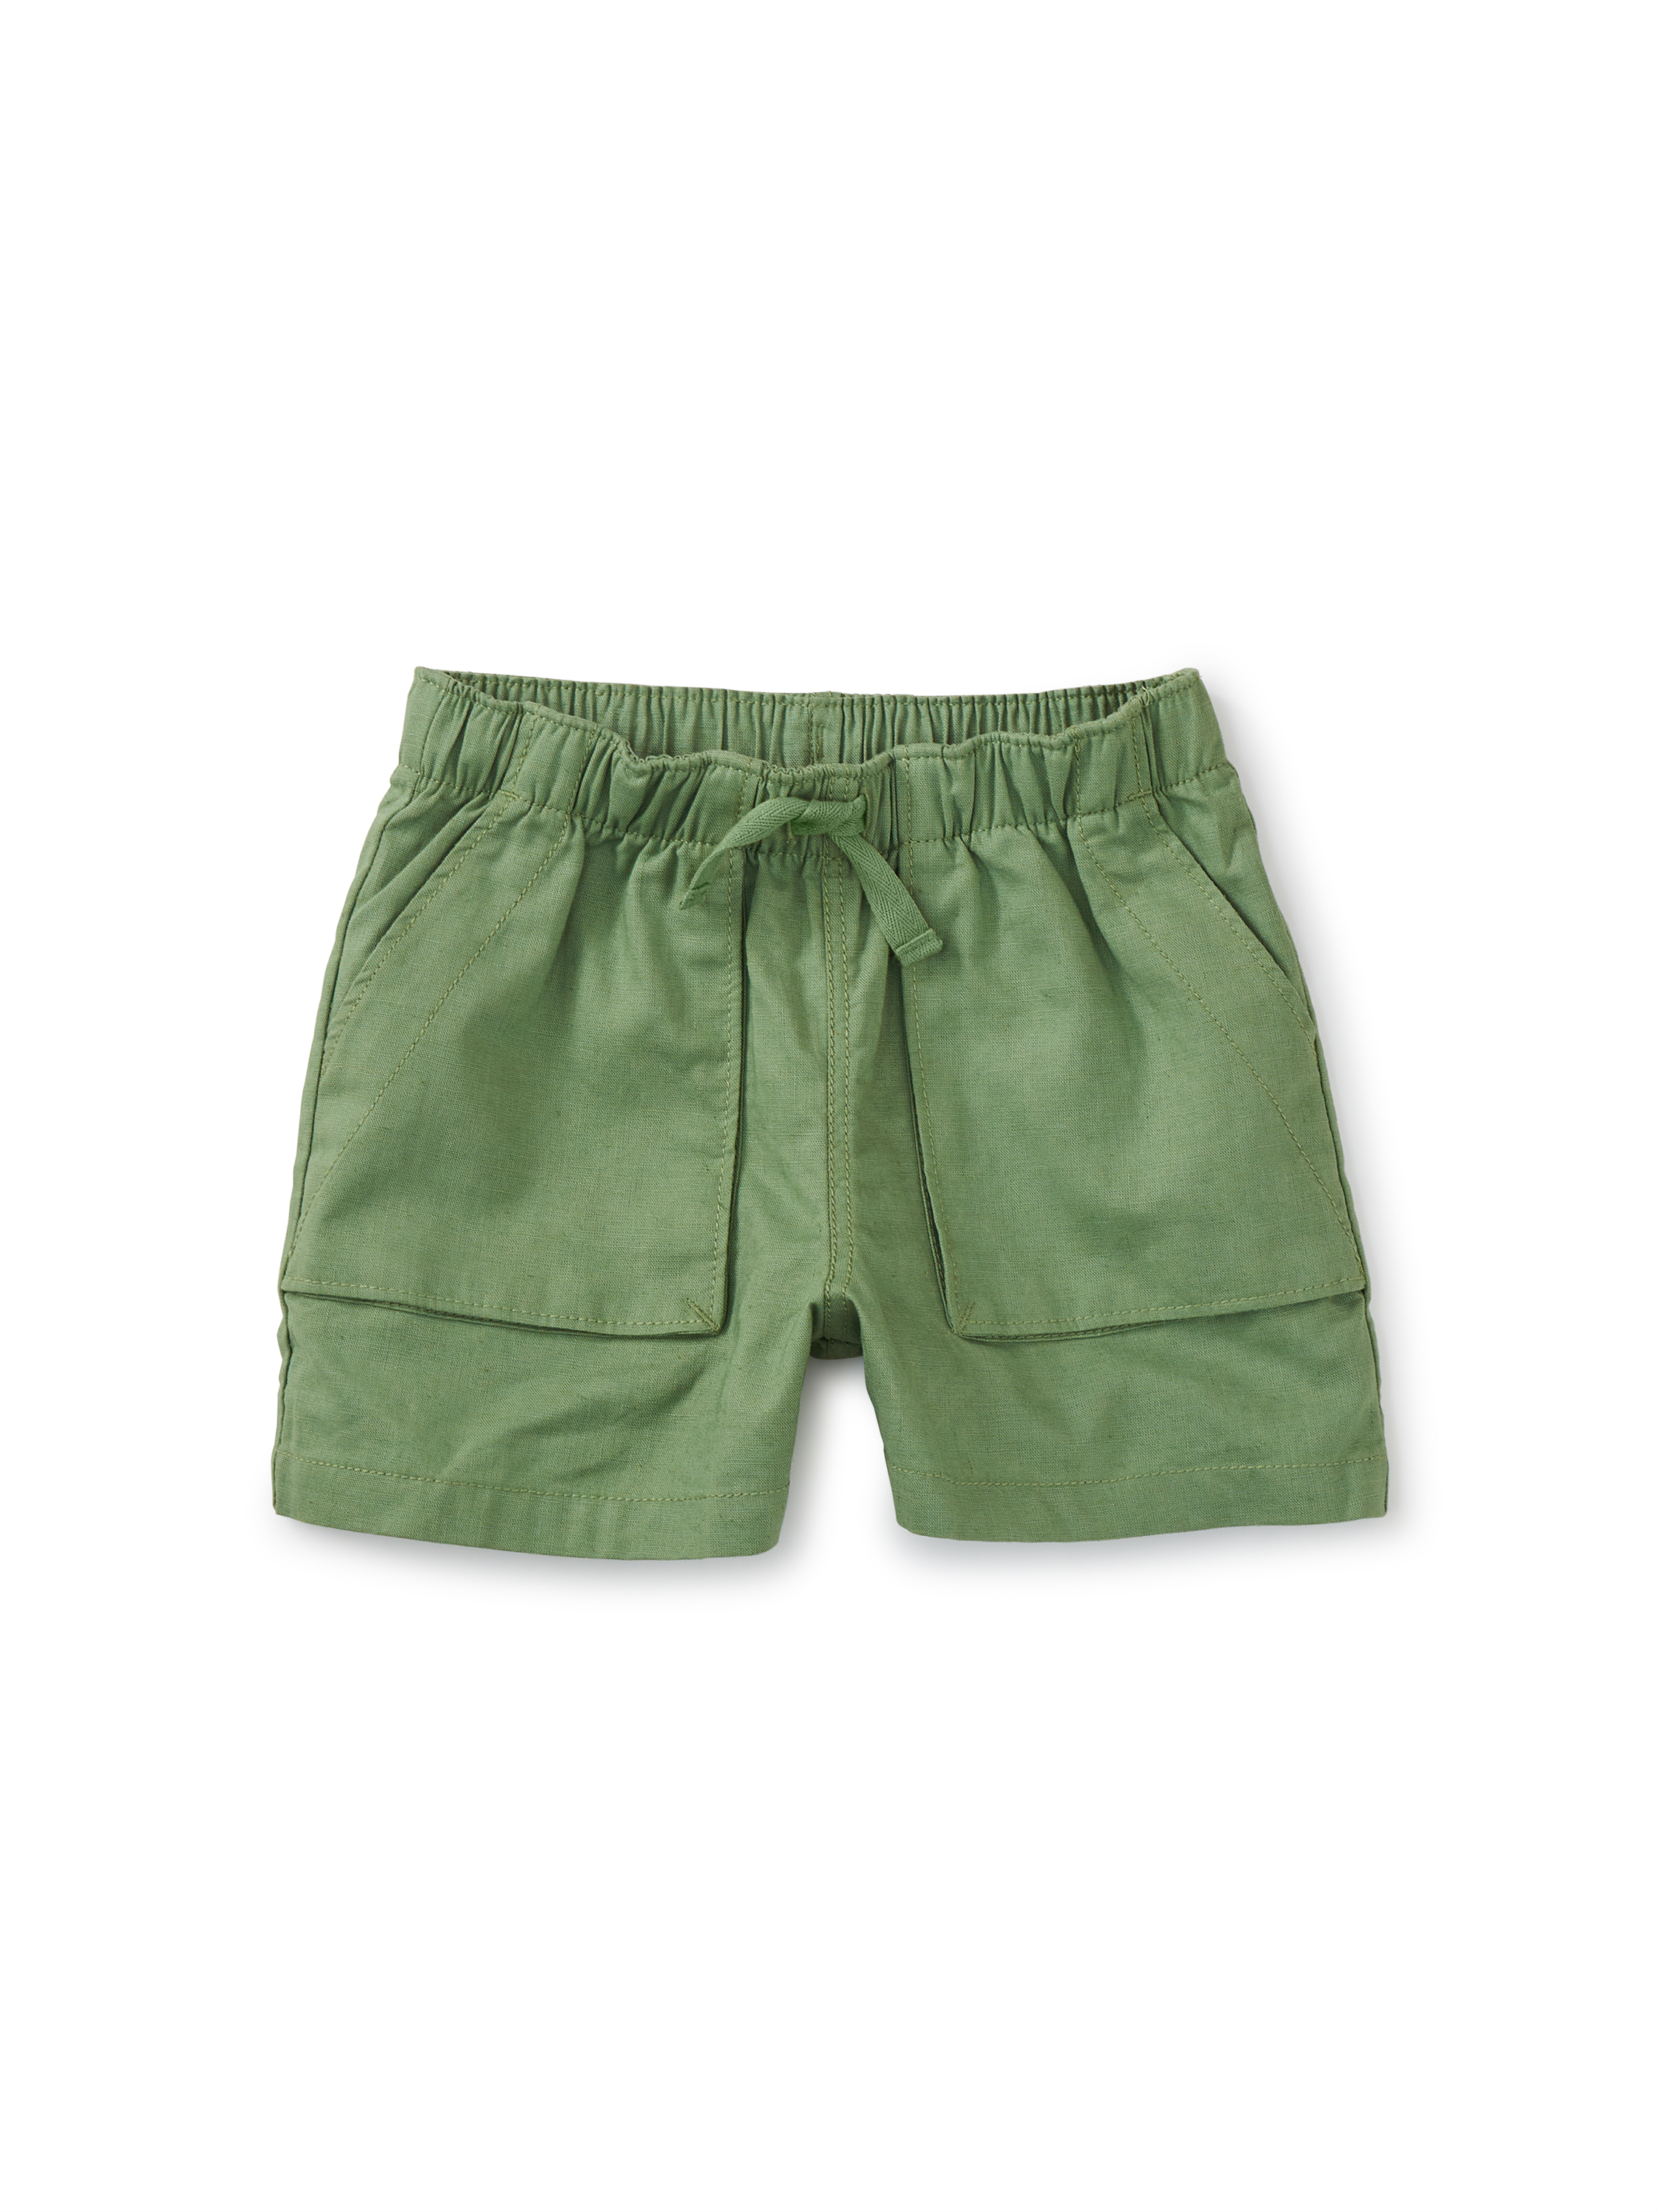 Camp Shorts | Tea Collection